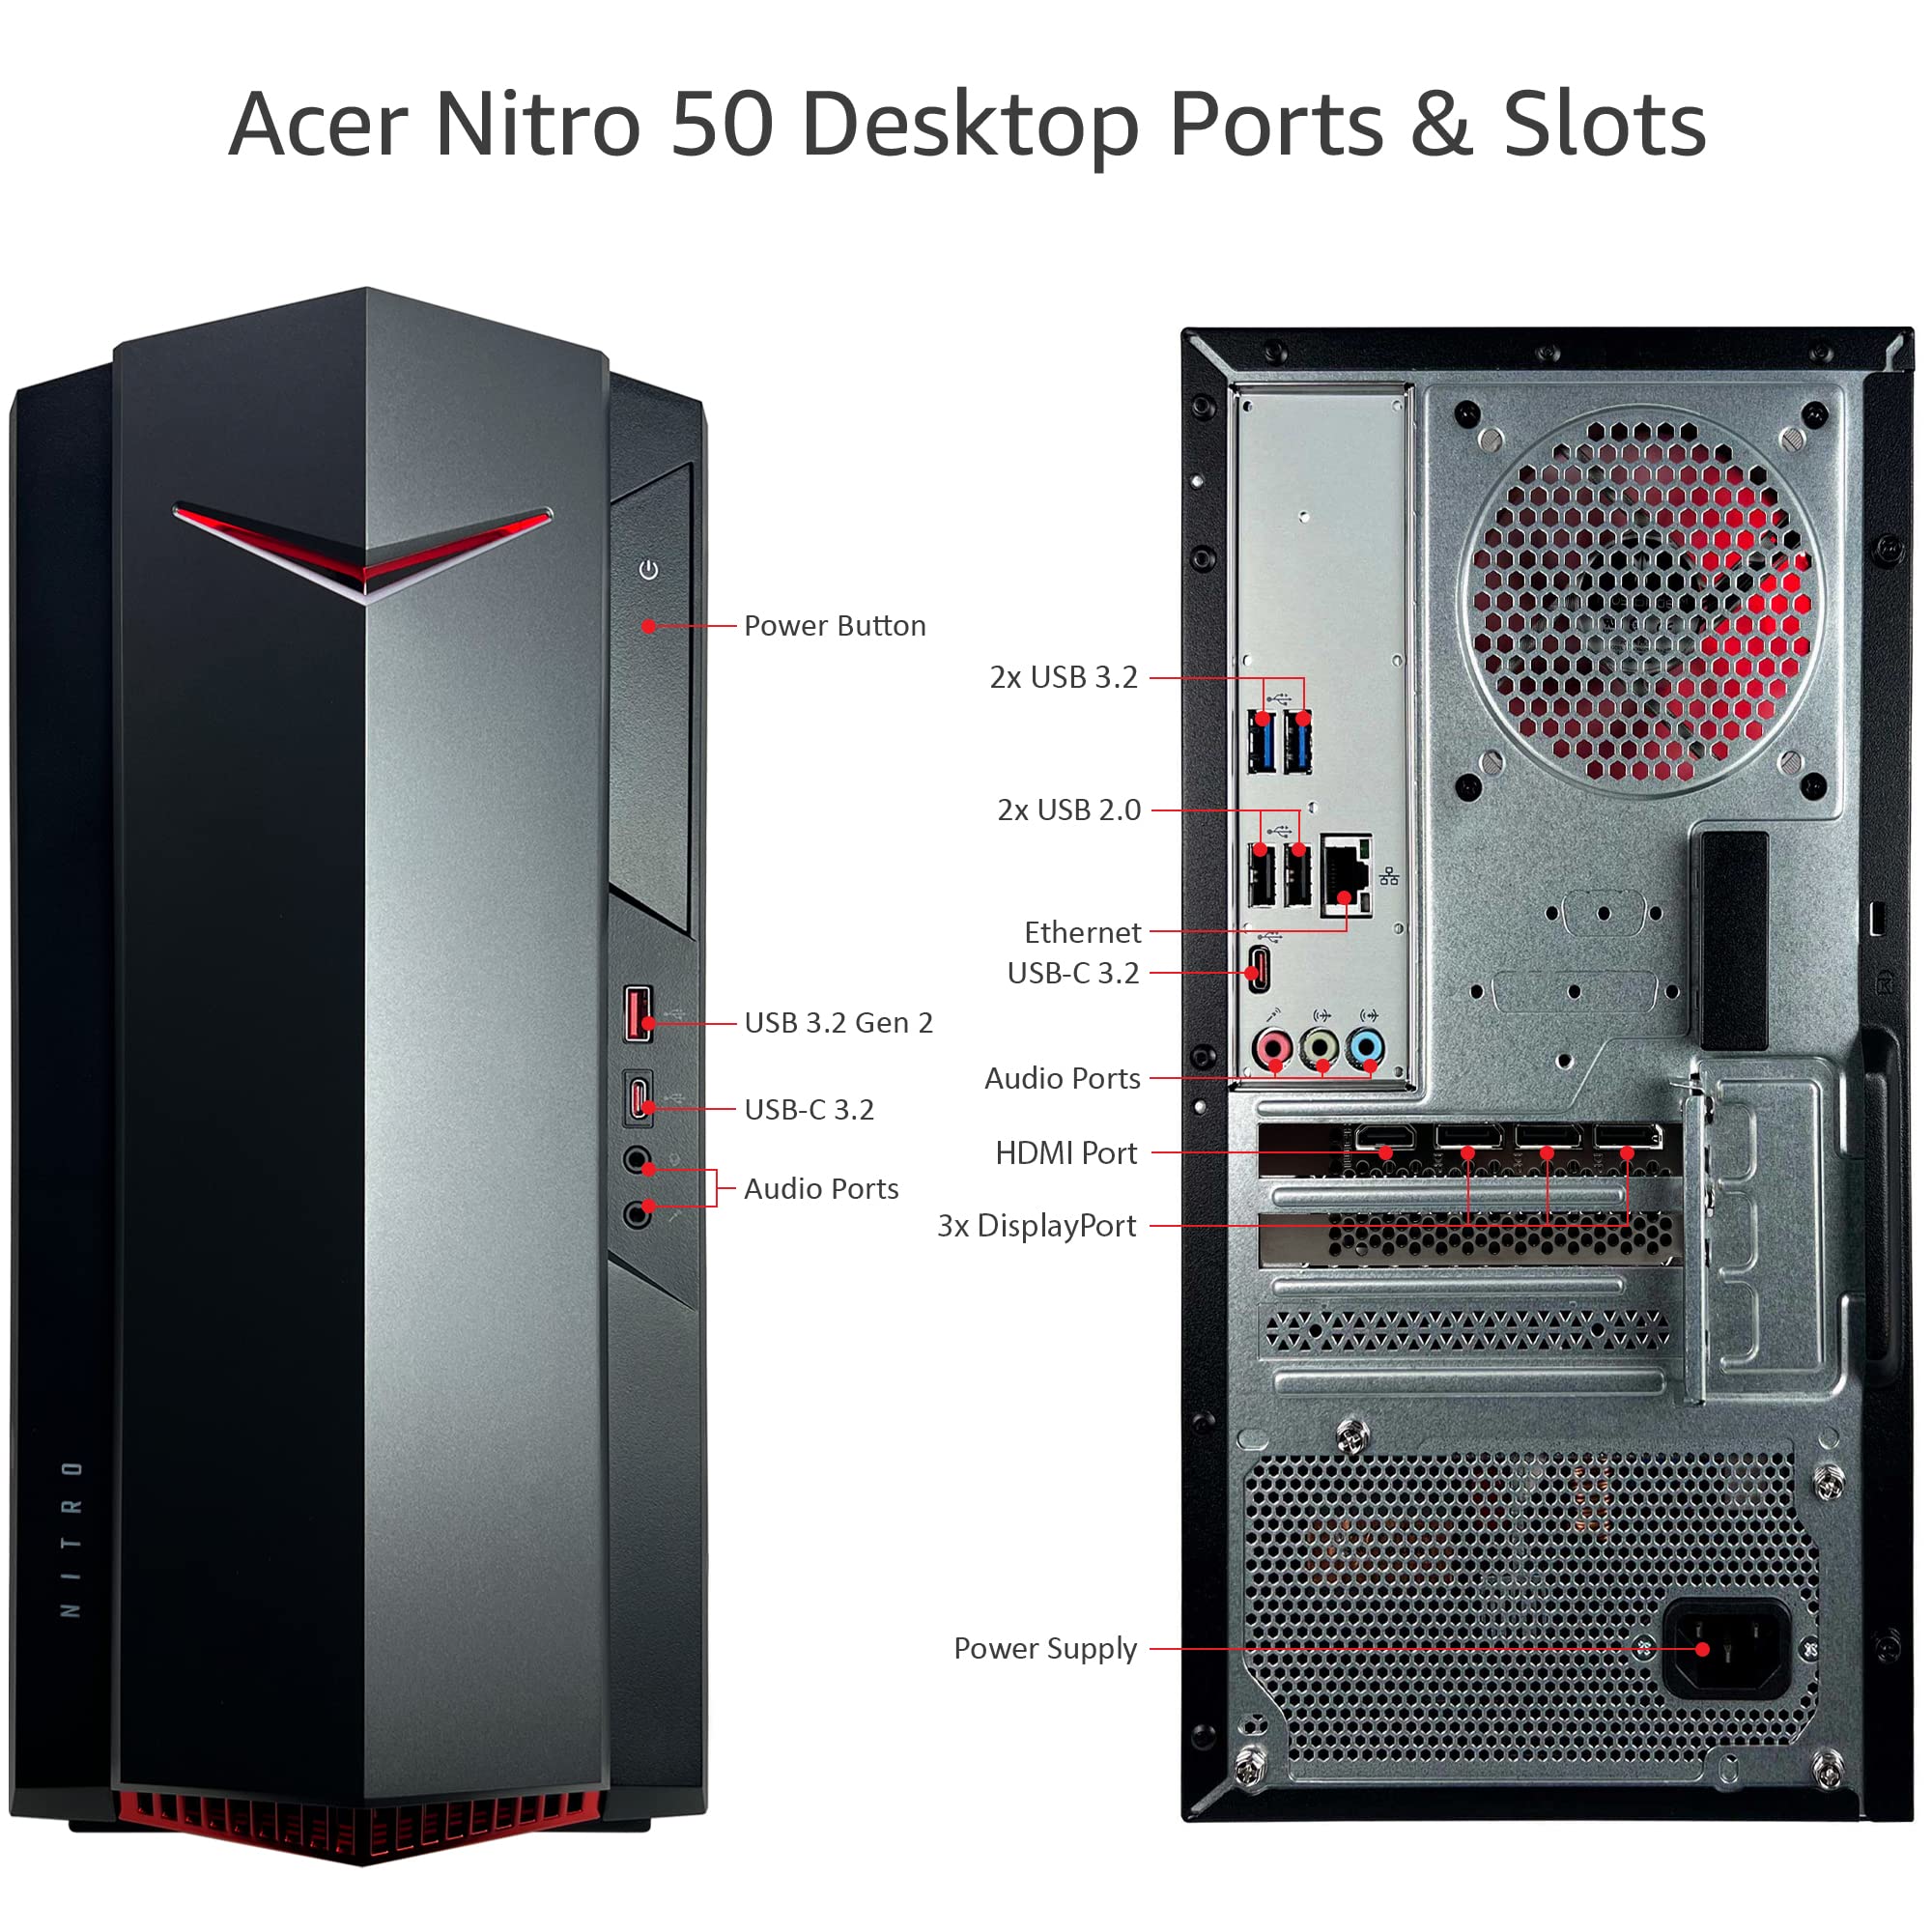 acer Nitro 50 N50 Gaming Desktop Computer - 12th Gen Intel Core i9-12900K 16-Core up to 5.2GHz CPU, 64GB RAM, 4TB NVMe SSD + 12TB HDD, GeForce RTX 3060Ti 8GB GPU, Intel Wi-Fi 6, Windows 11 Pro